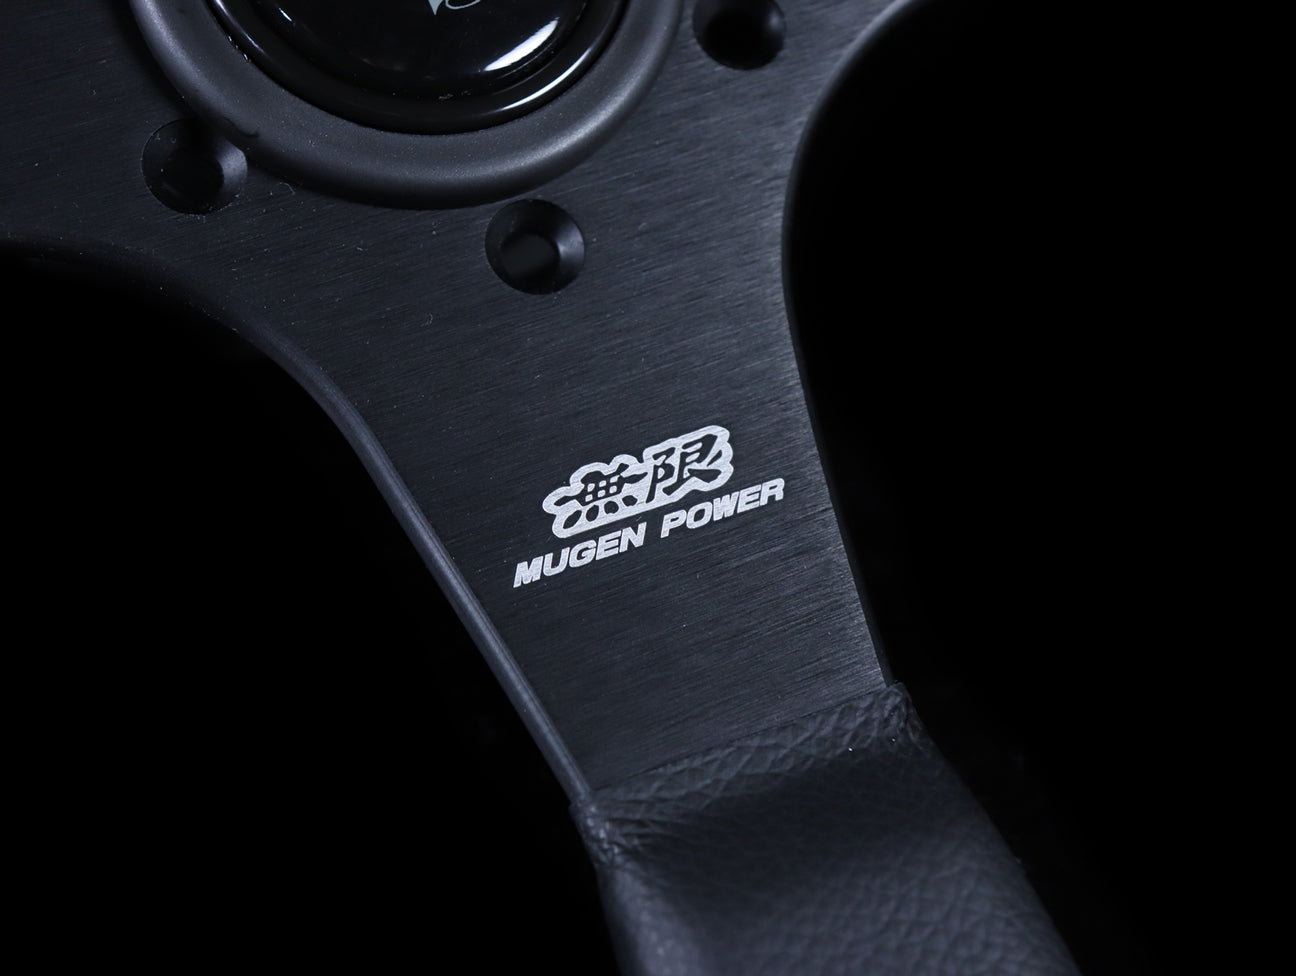 Mugen Racing III Steering Wheel - Leather